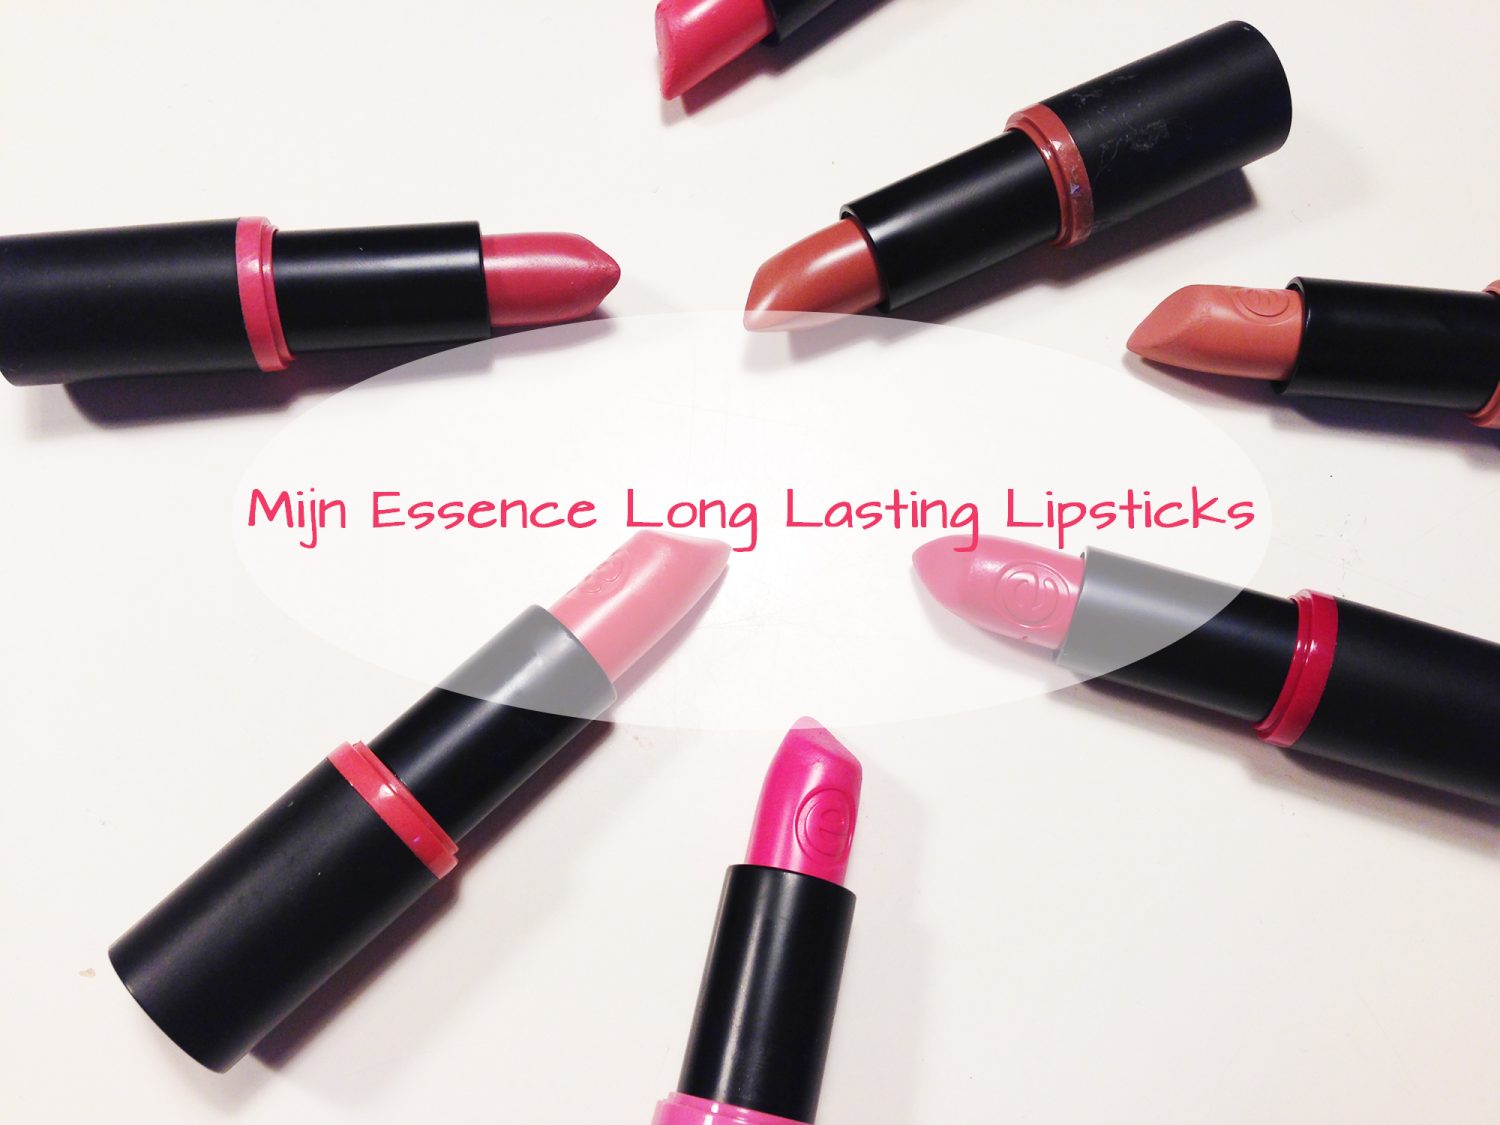 Mijn Essence Lipsticks